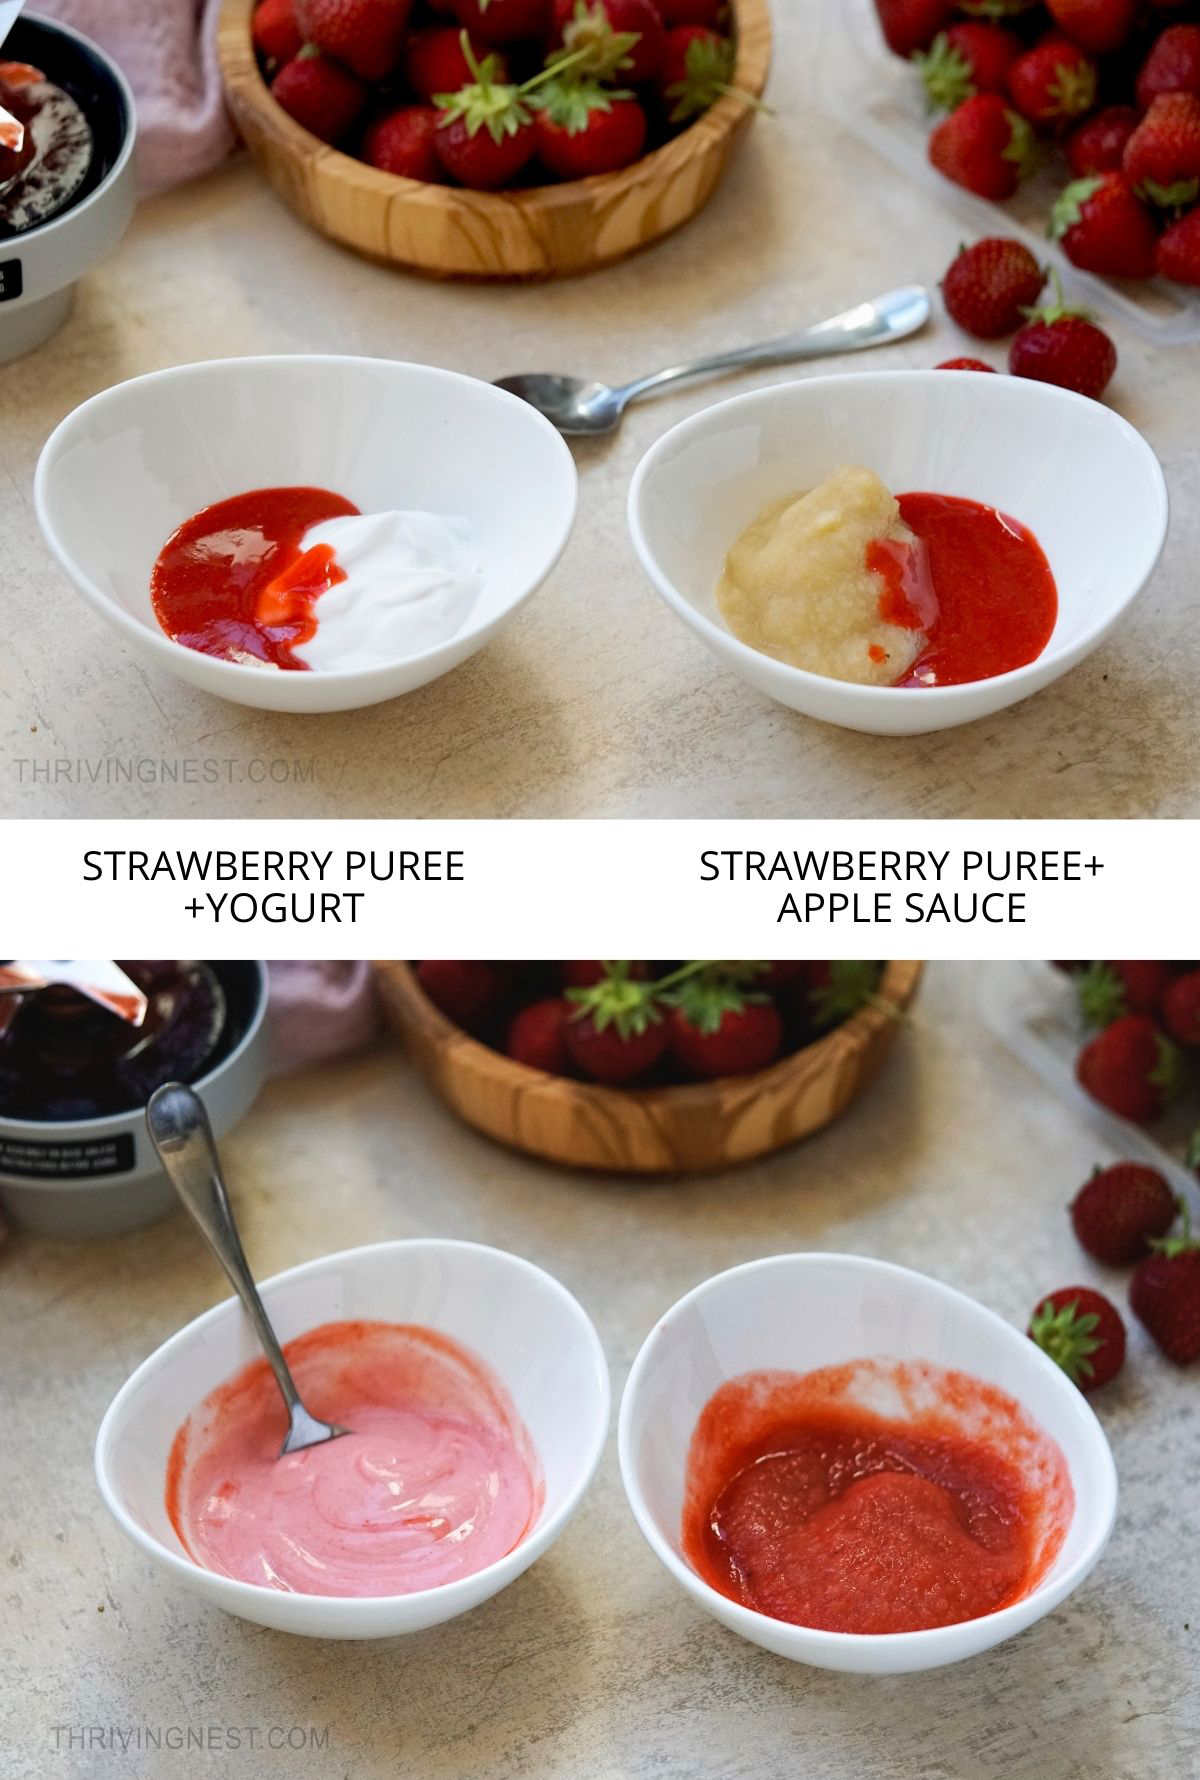 Strawberry puree combinations.